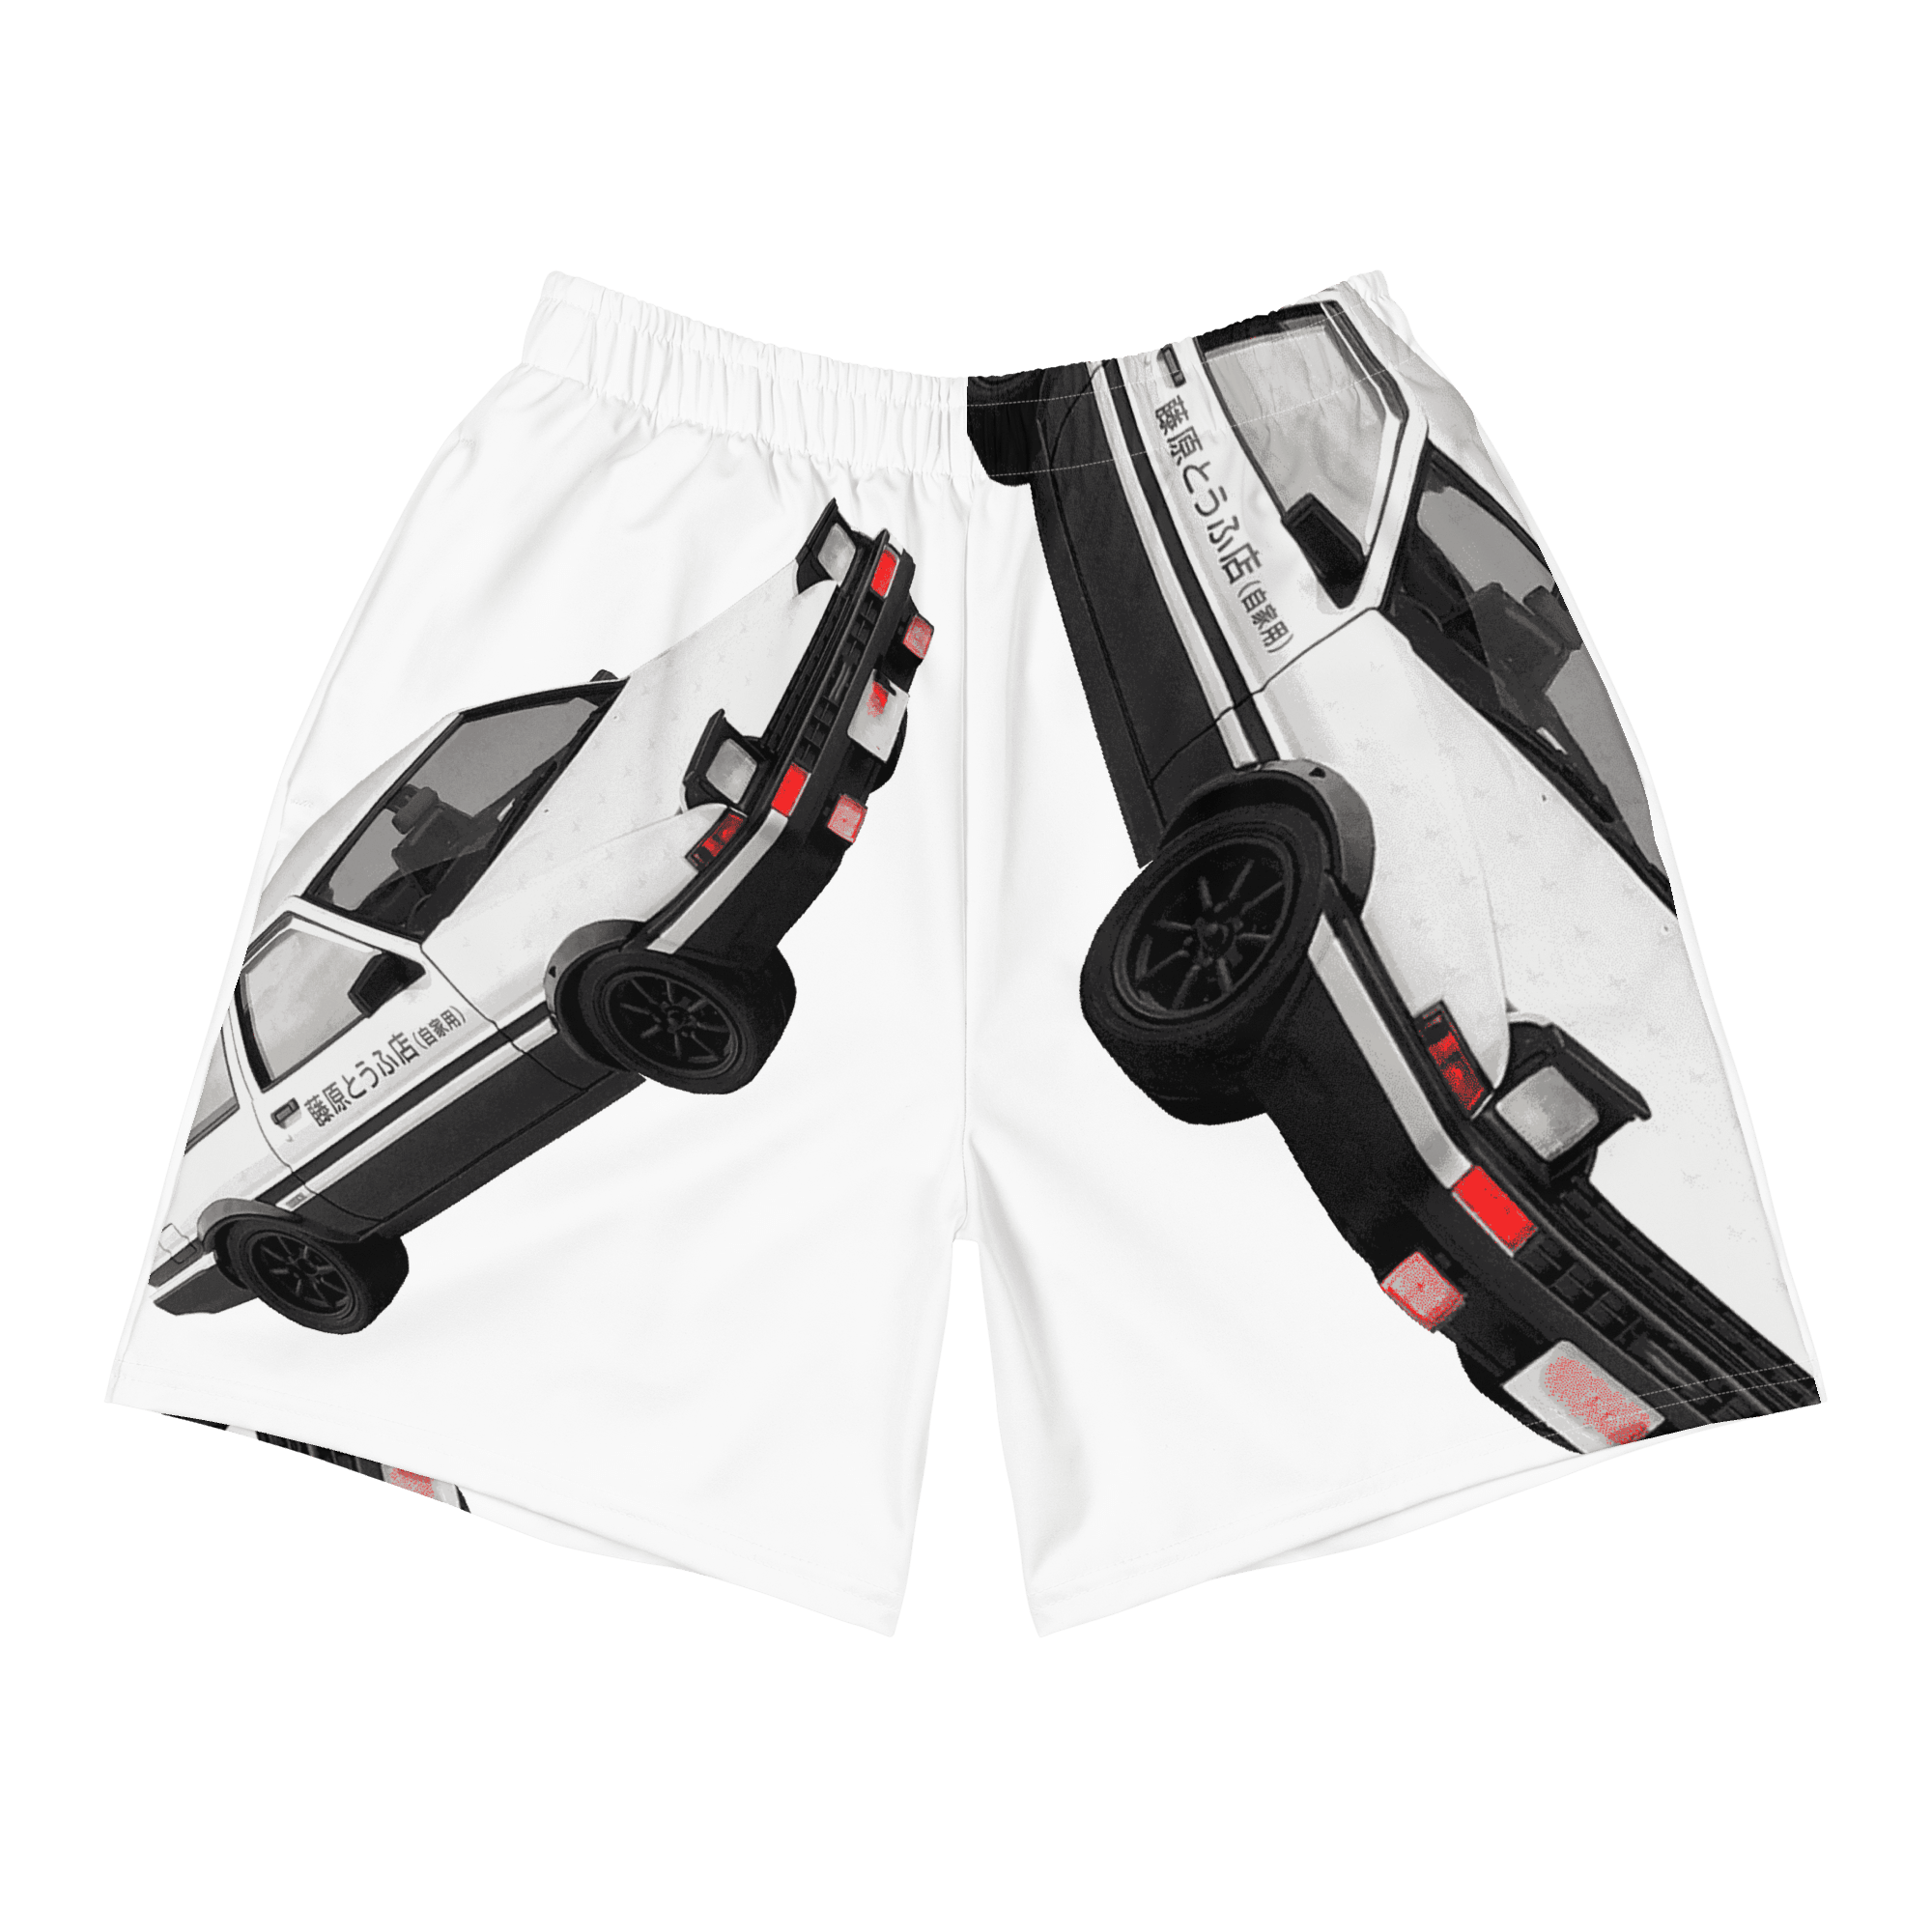 BEAT® Unisex Shorts (10 pieces for sale) - Kikillo Club